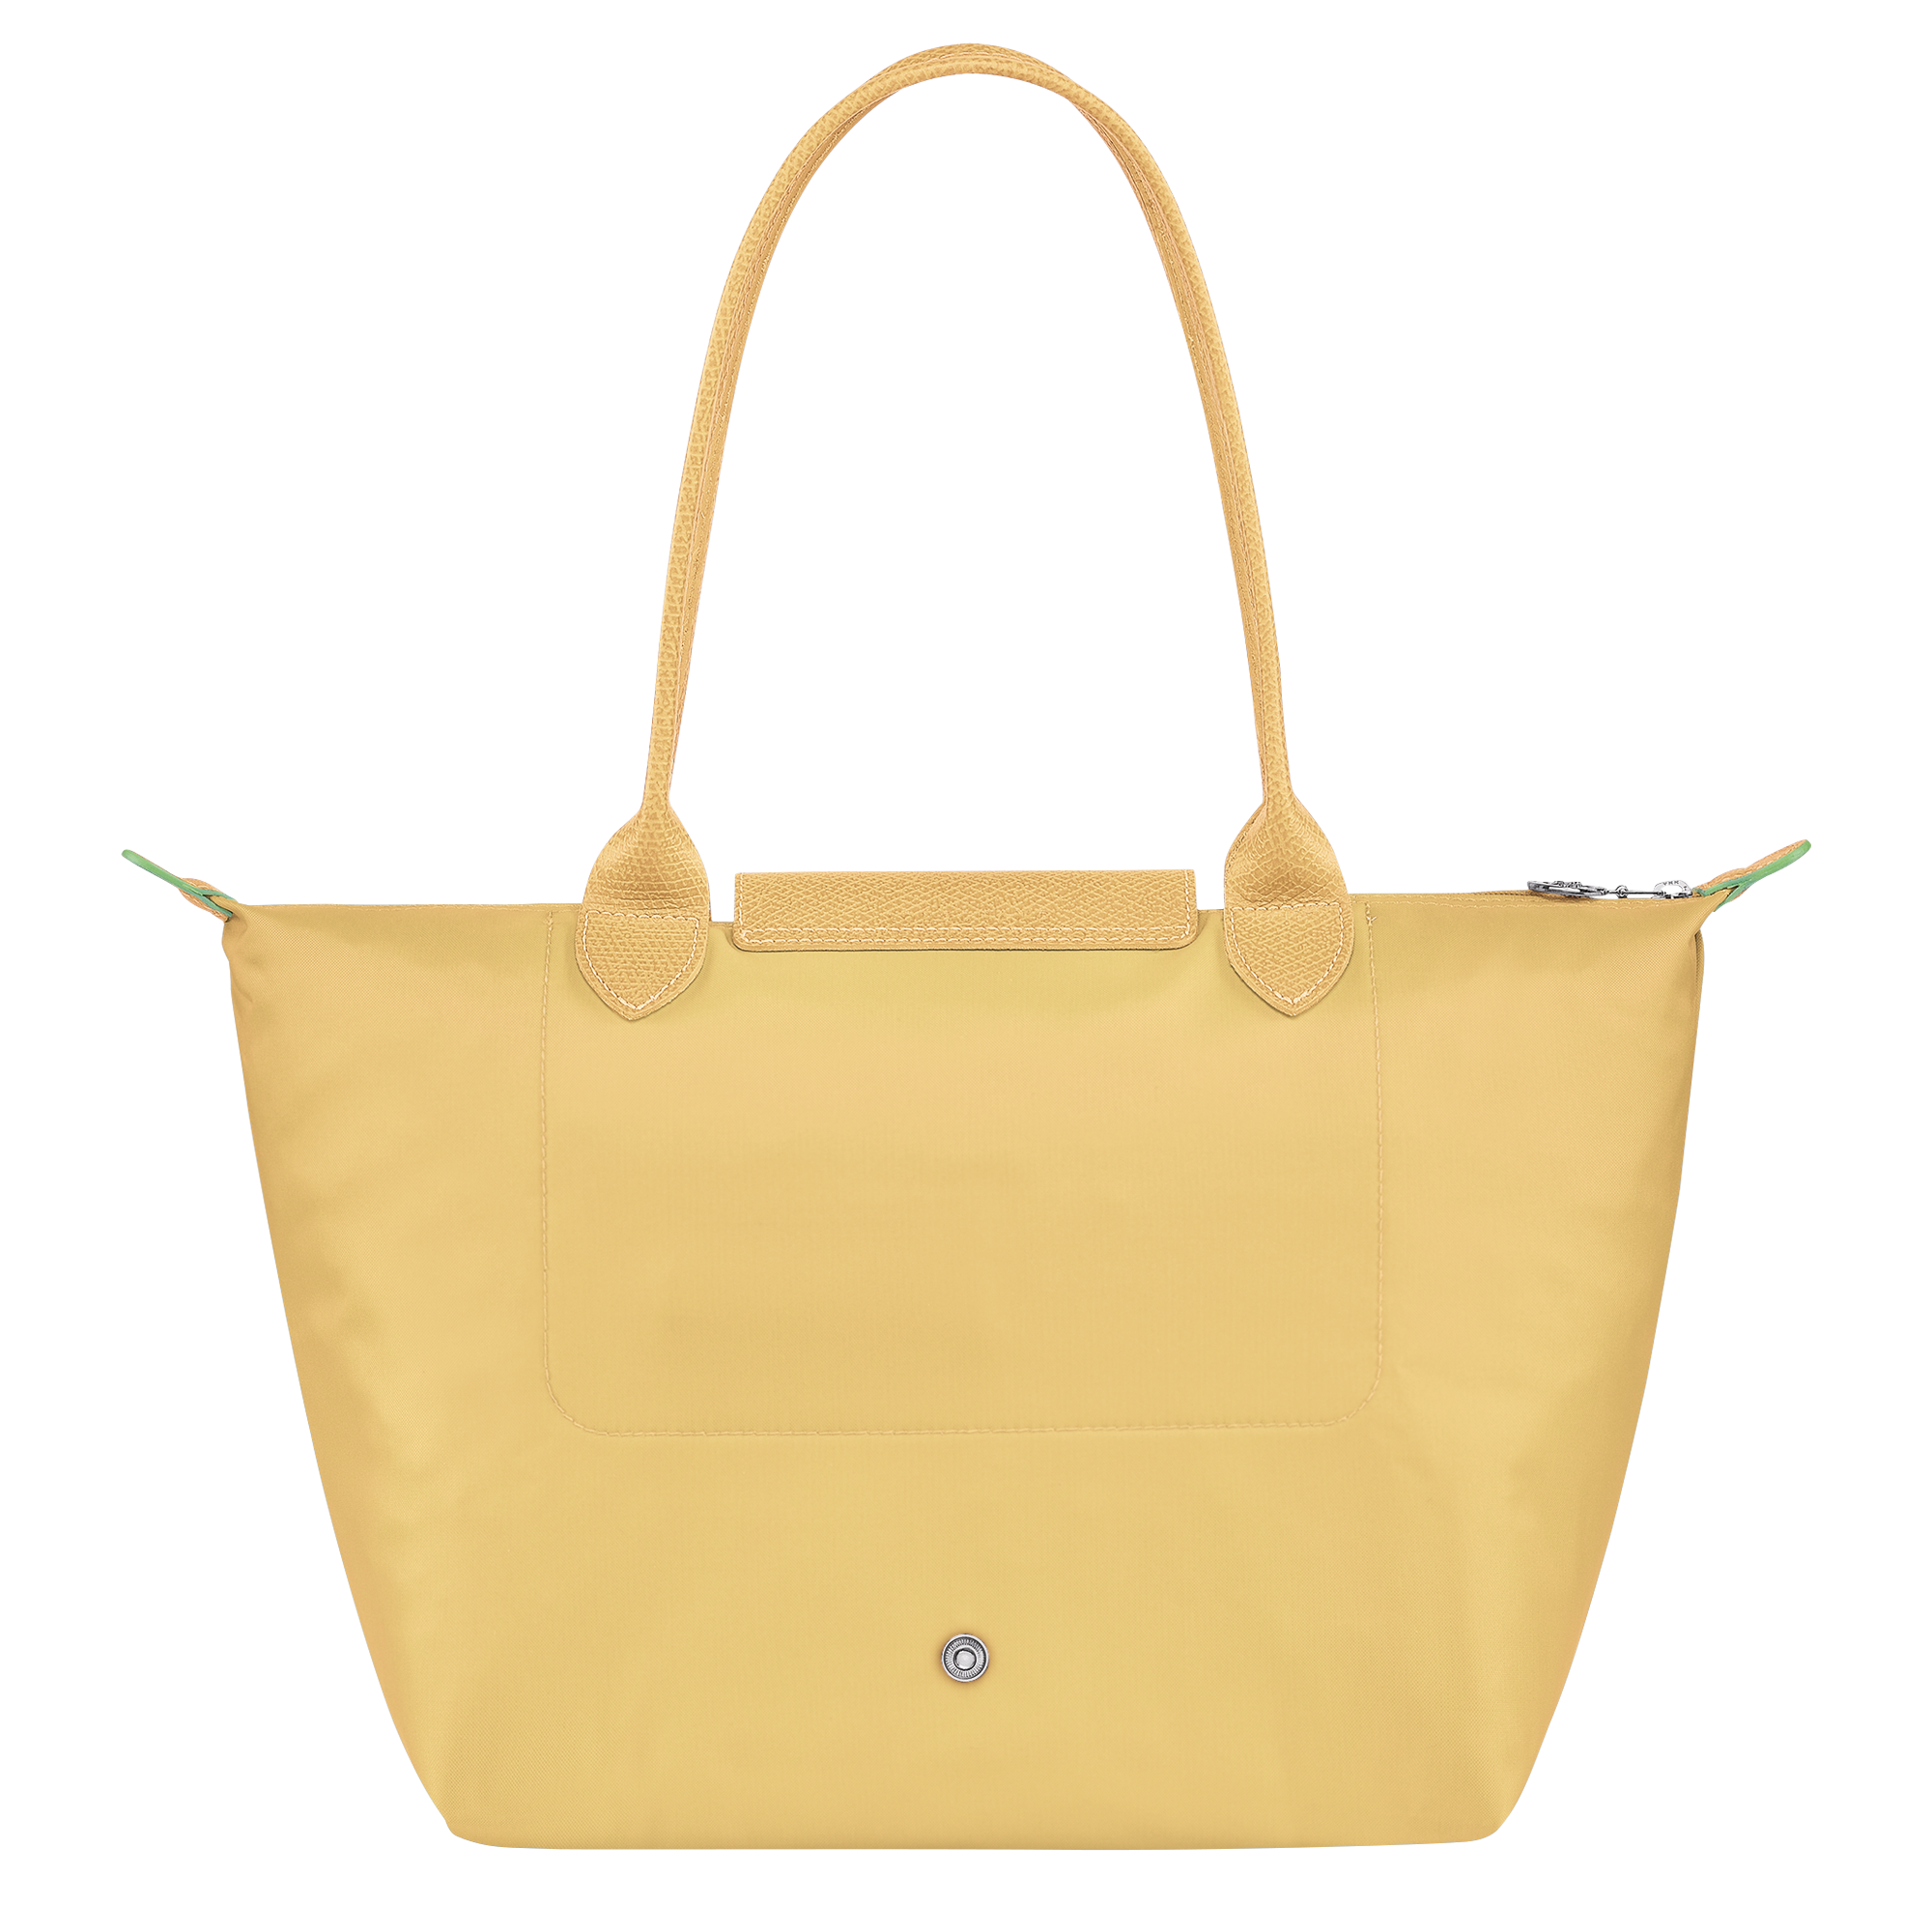 Pliage fabric handbag Longchamp White in Cloth - 35330249